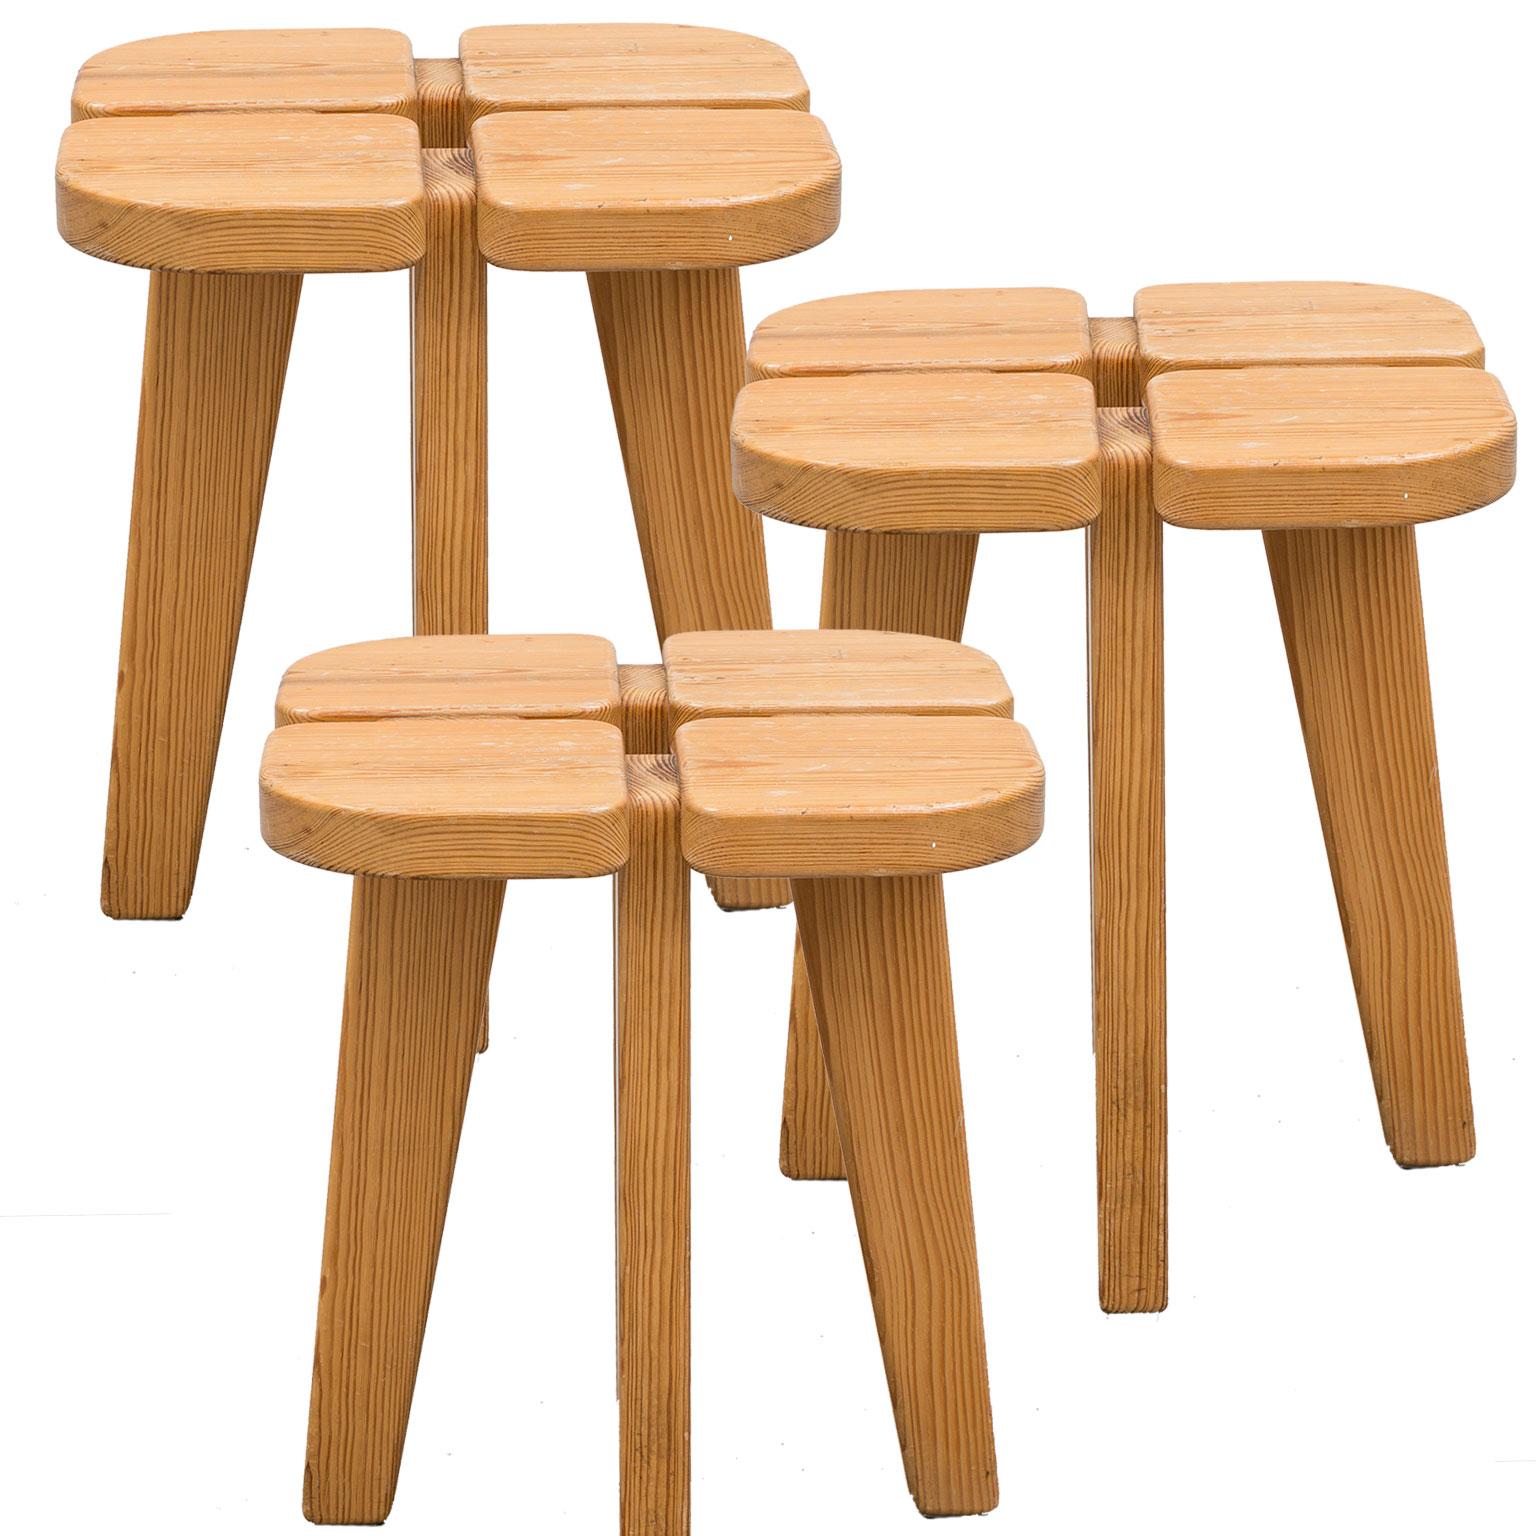 Scandinavian Modern "Apila" pinewood stools by Lisa Johansson-Pape, Finland